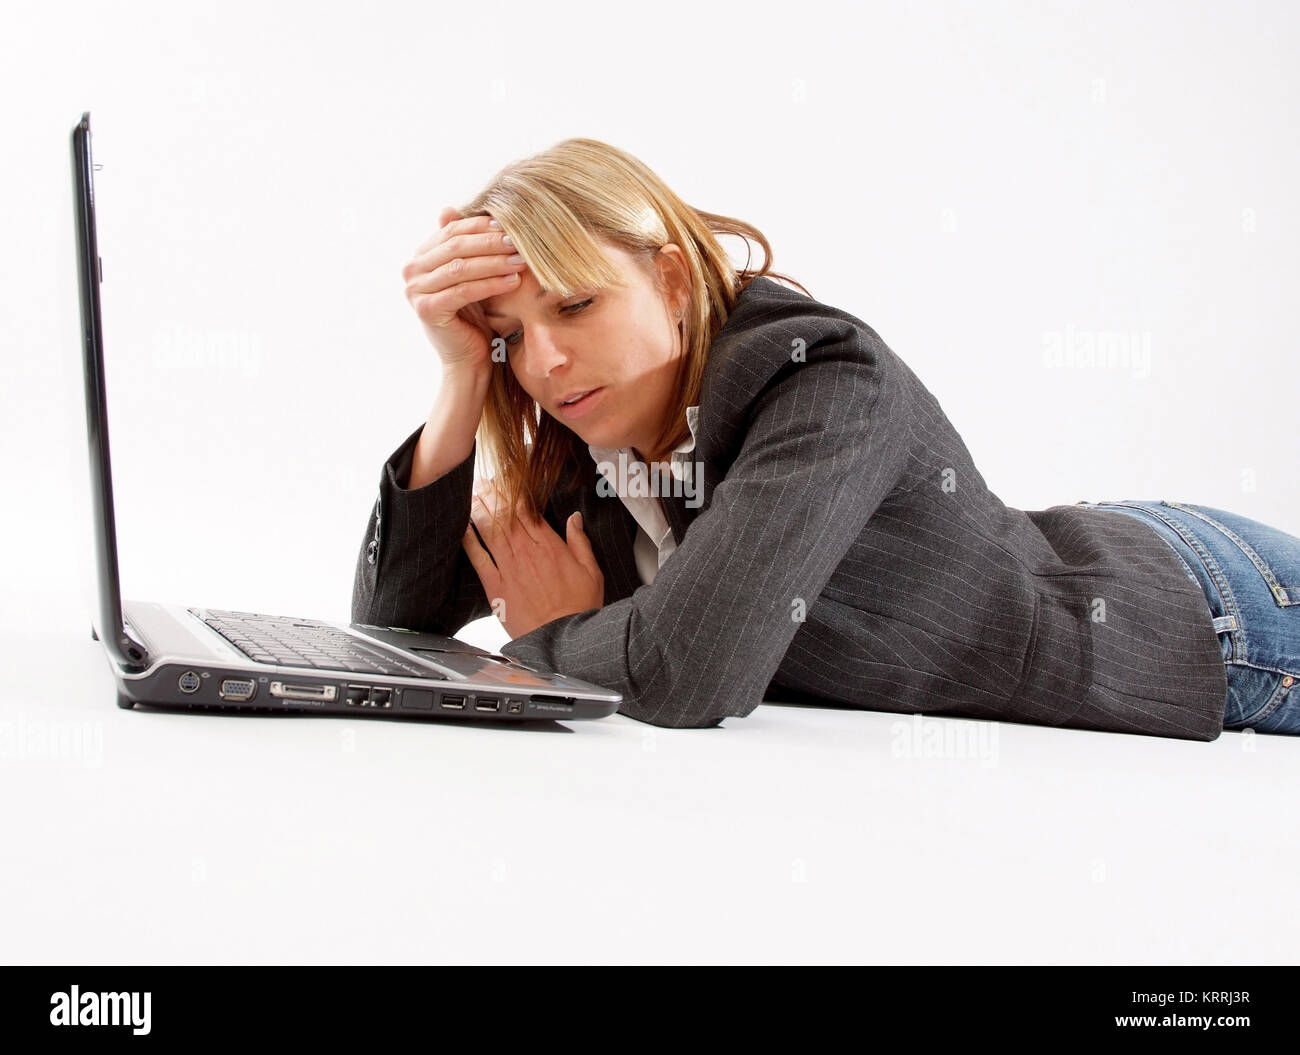 Erschoepfte Geschaeftsfrau mit Laptop - donna d'affari con computer portatile Foto Stock